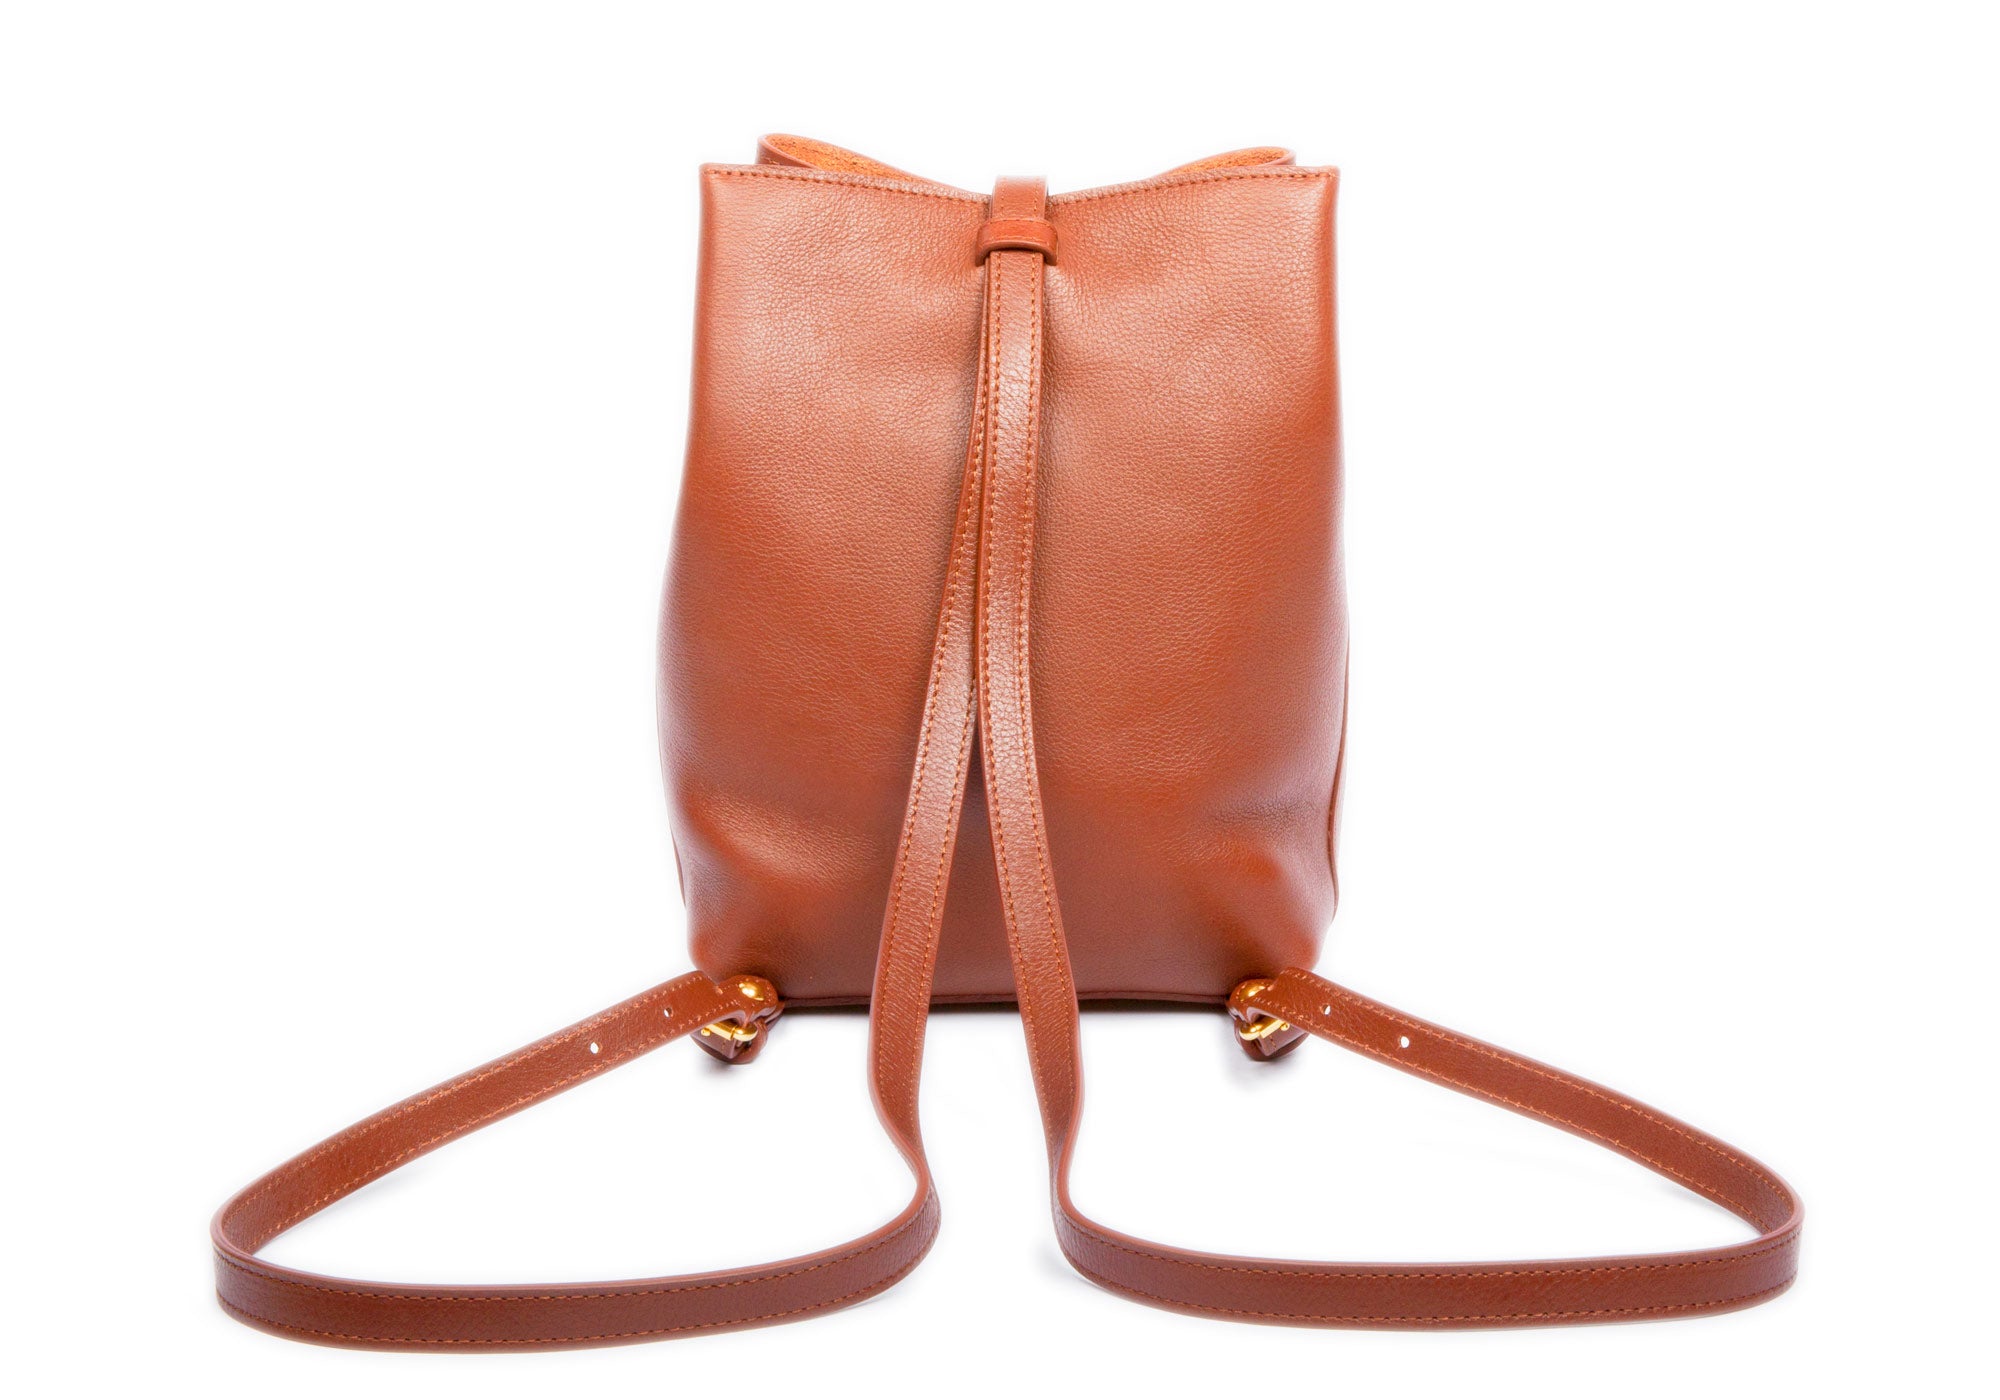 The Mini Sling Backpack Saddle Tan